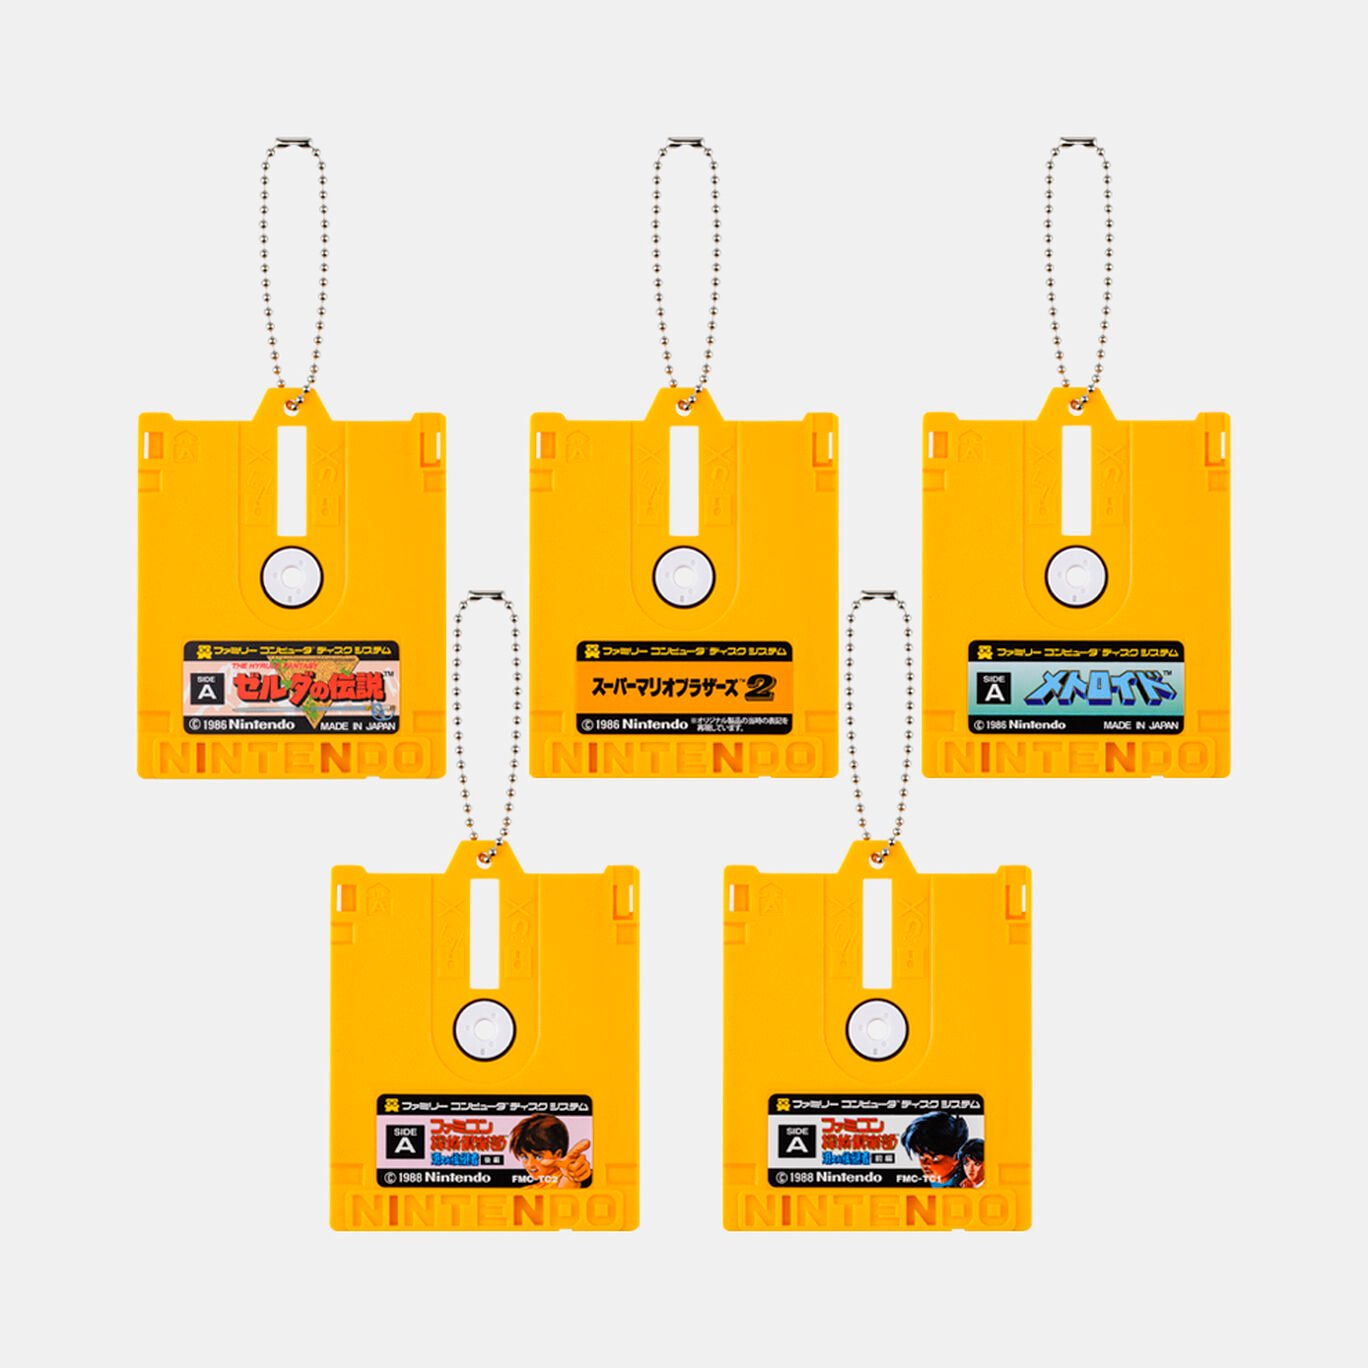 【BOX商品】カードケースコレクション ディスクシステム【Nintendo TOKYO取り扱い商品】